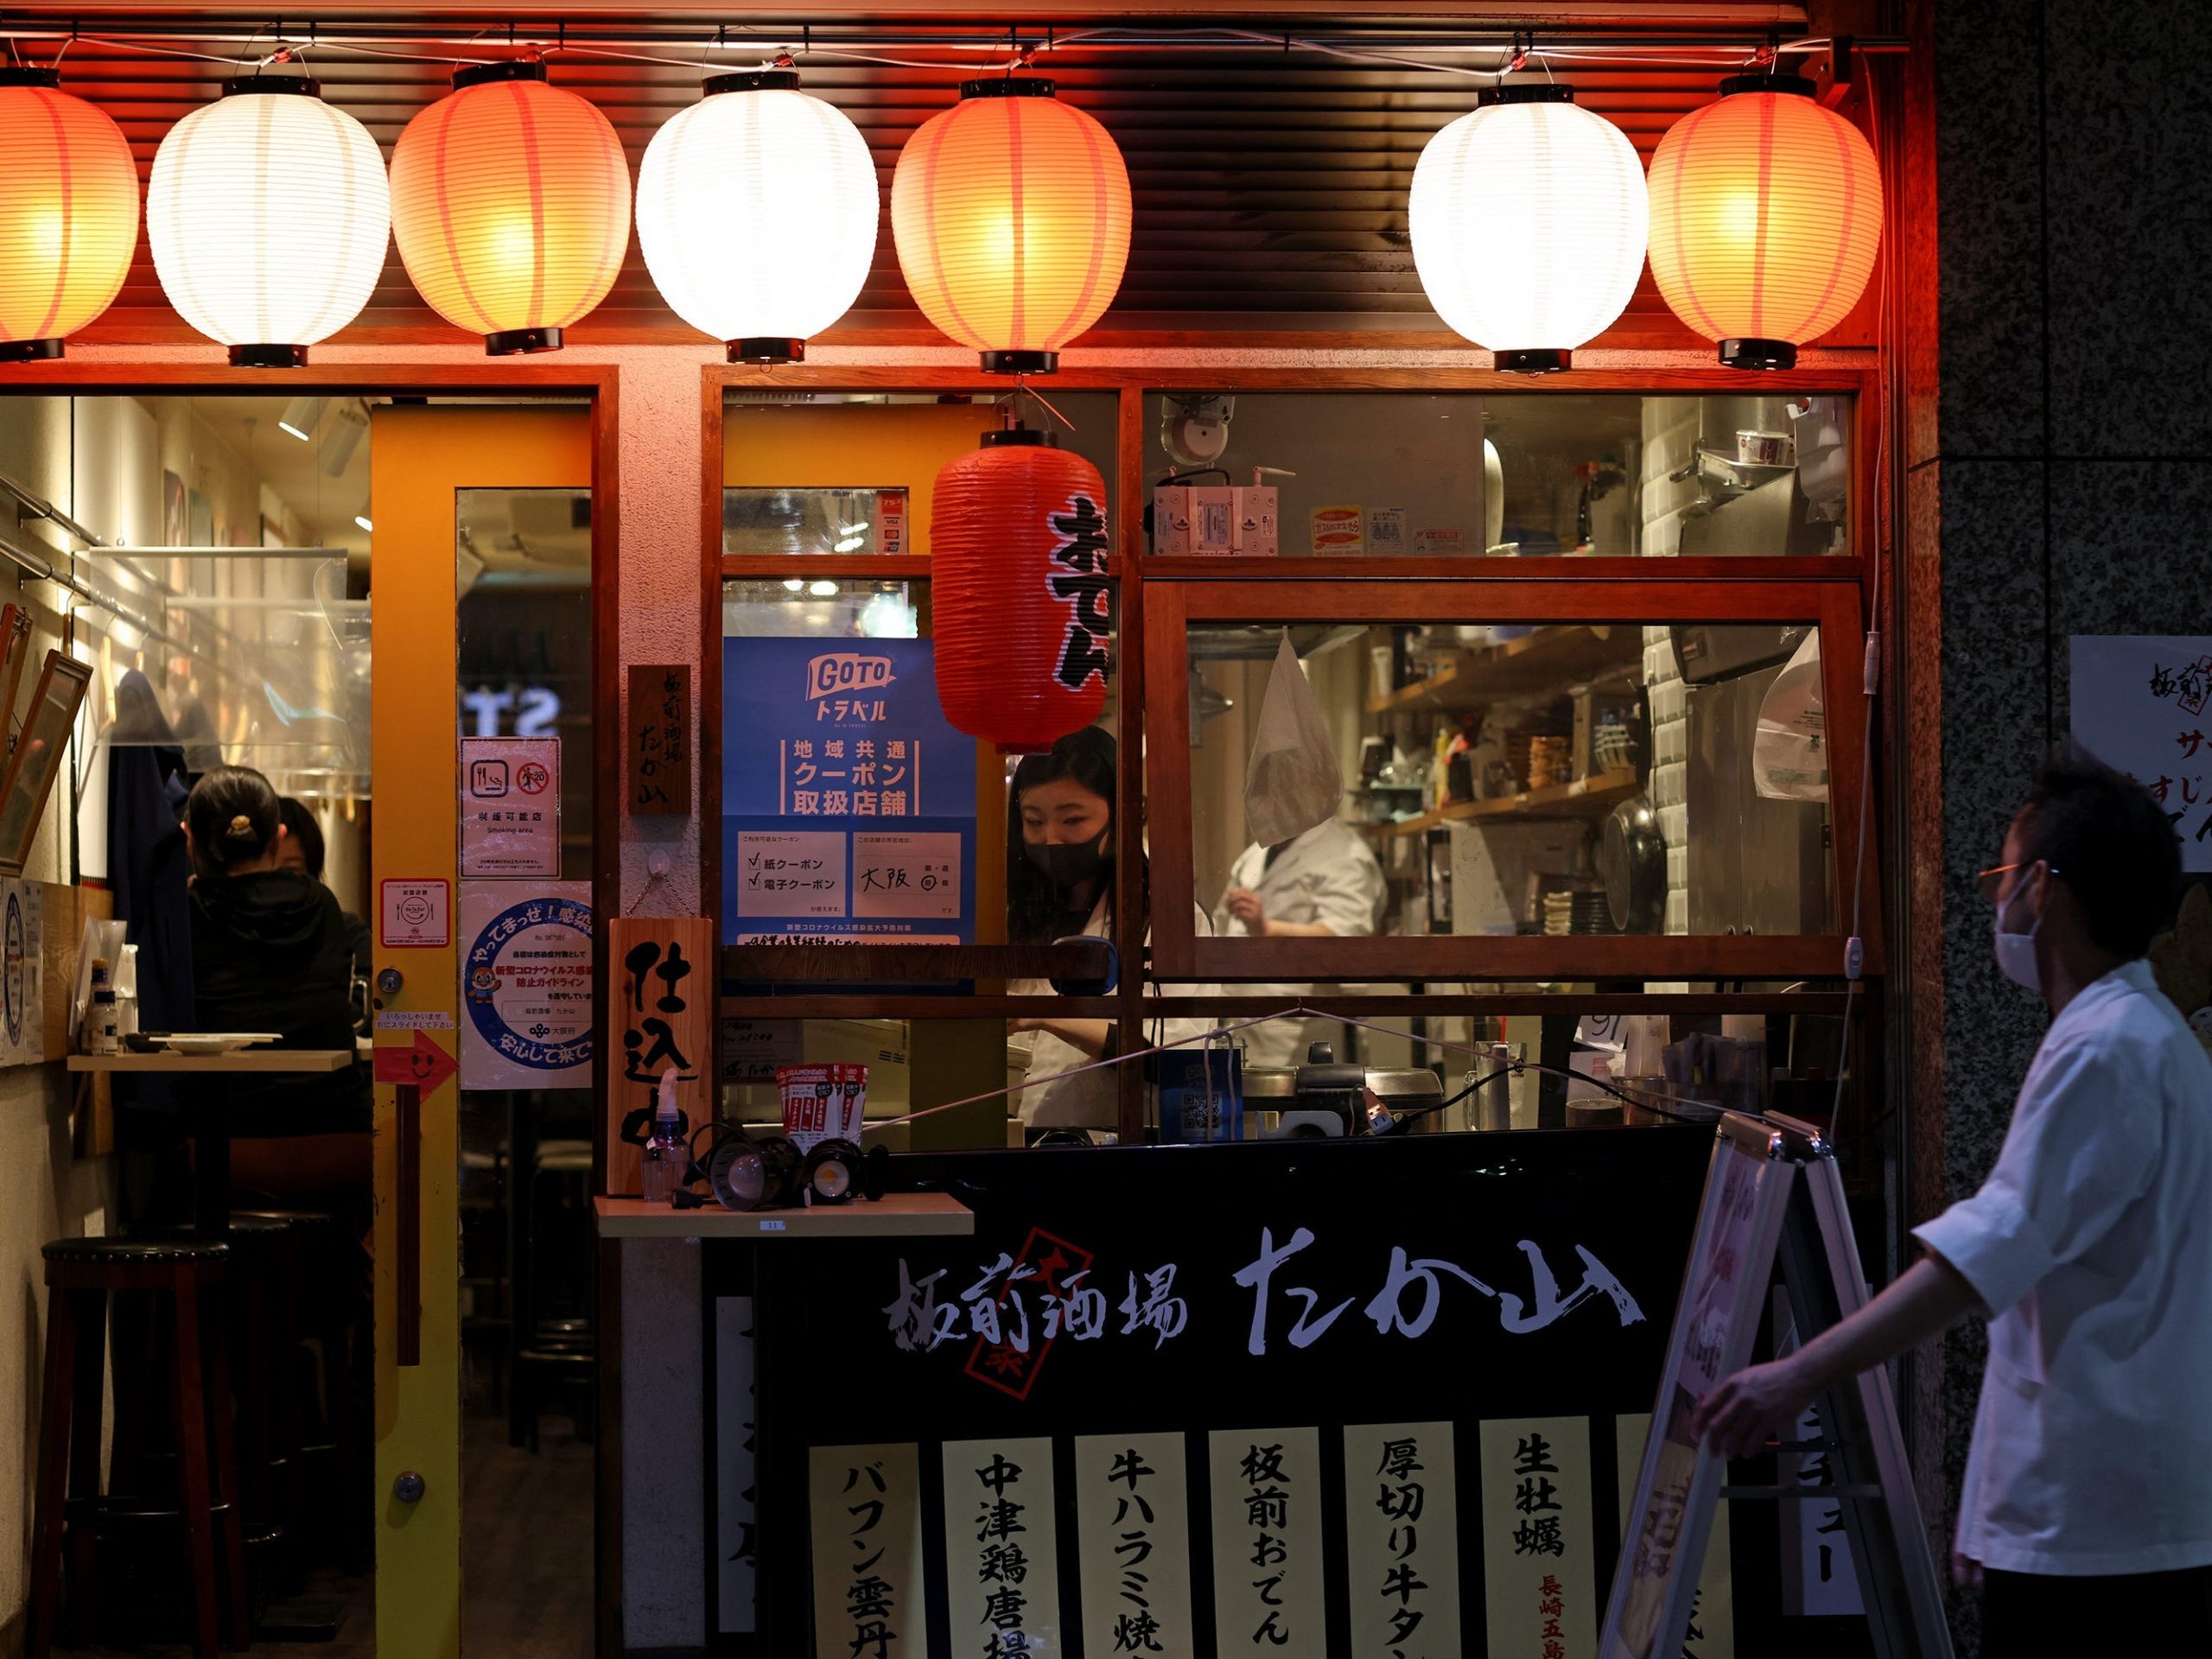 Japanese style bar in Osaka, Japan